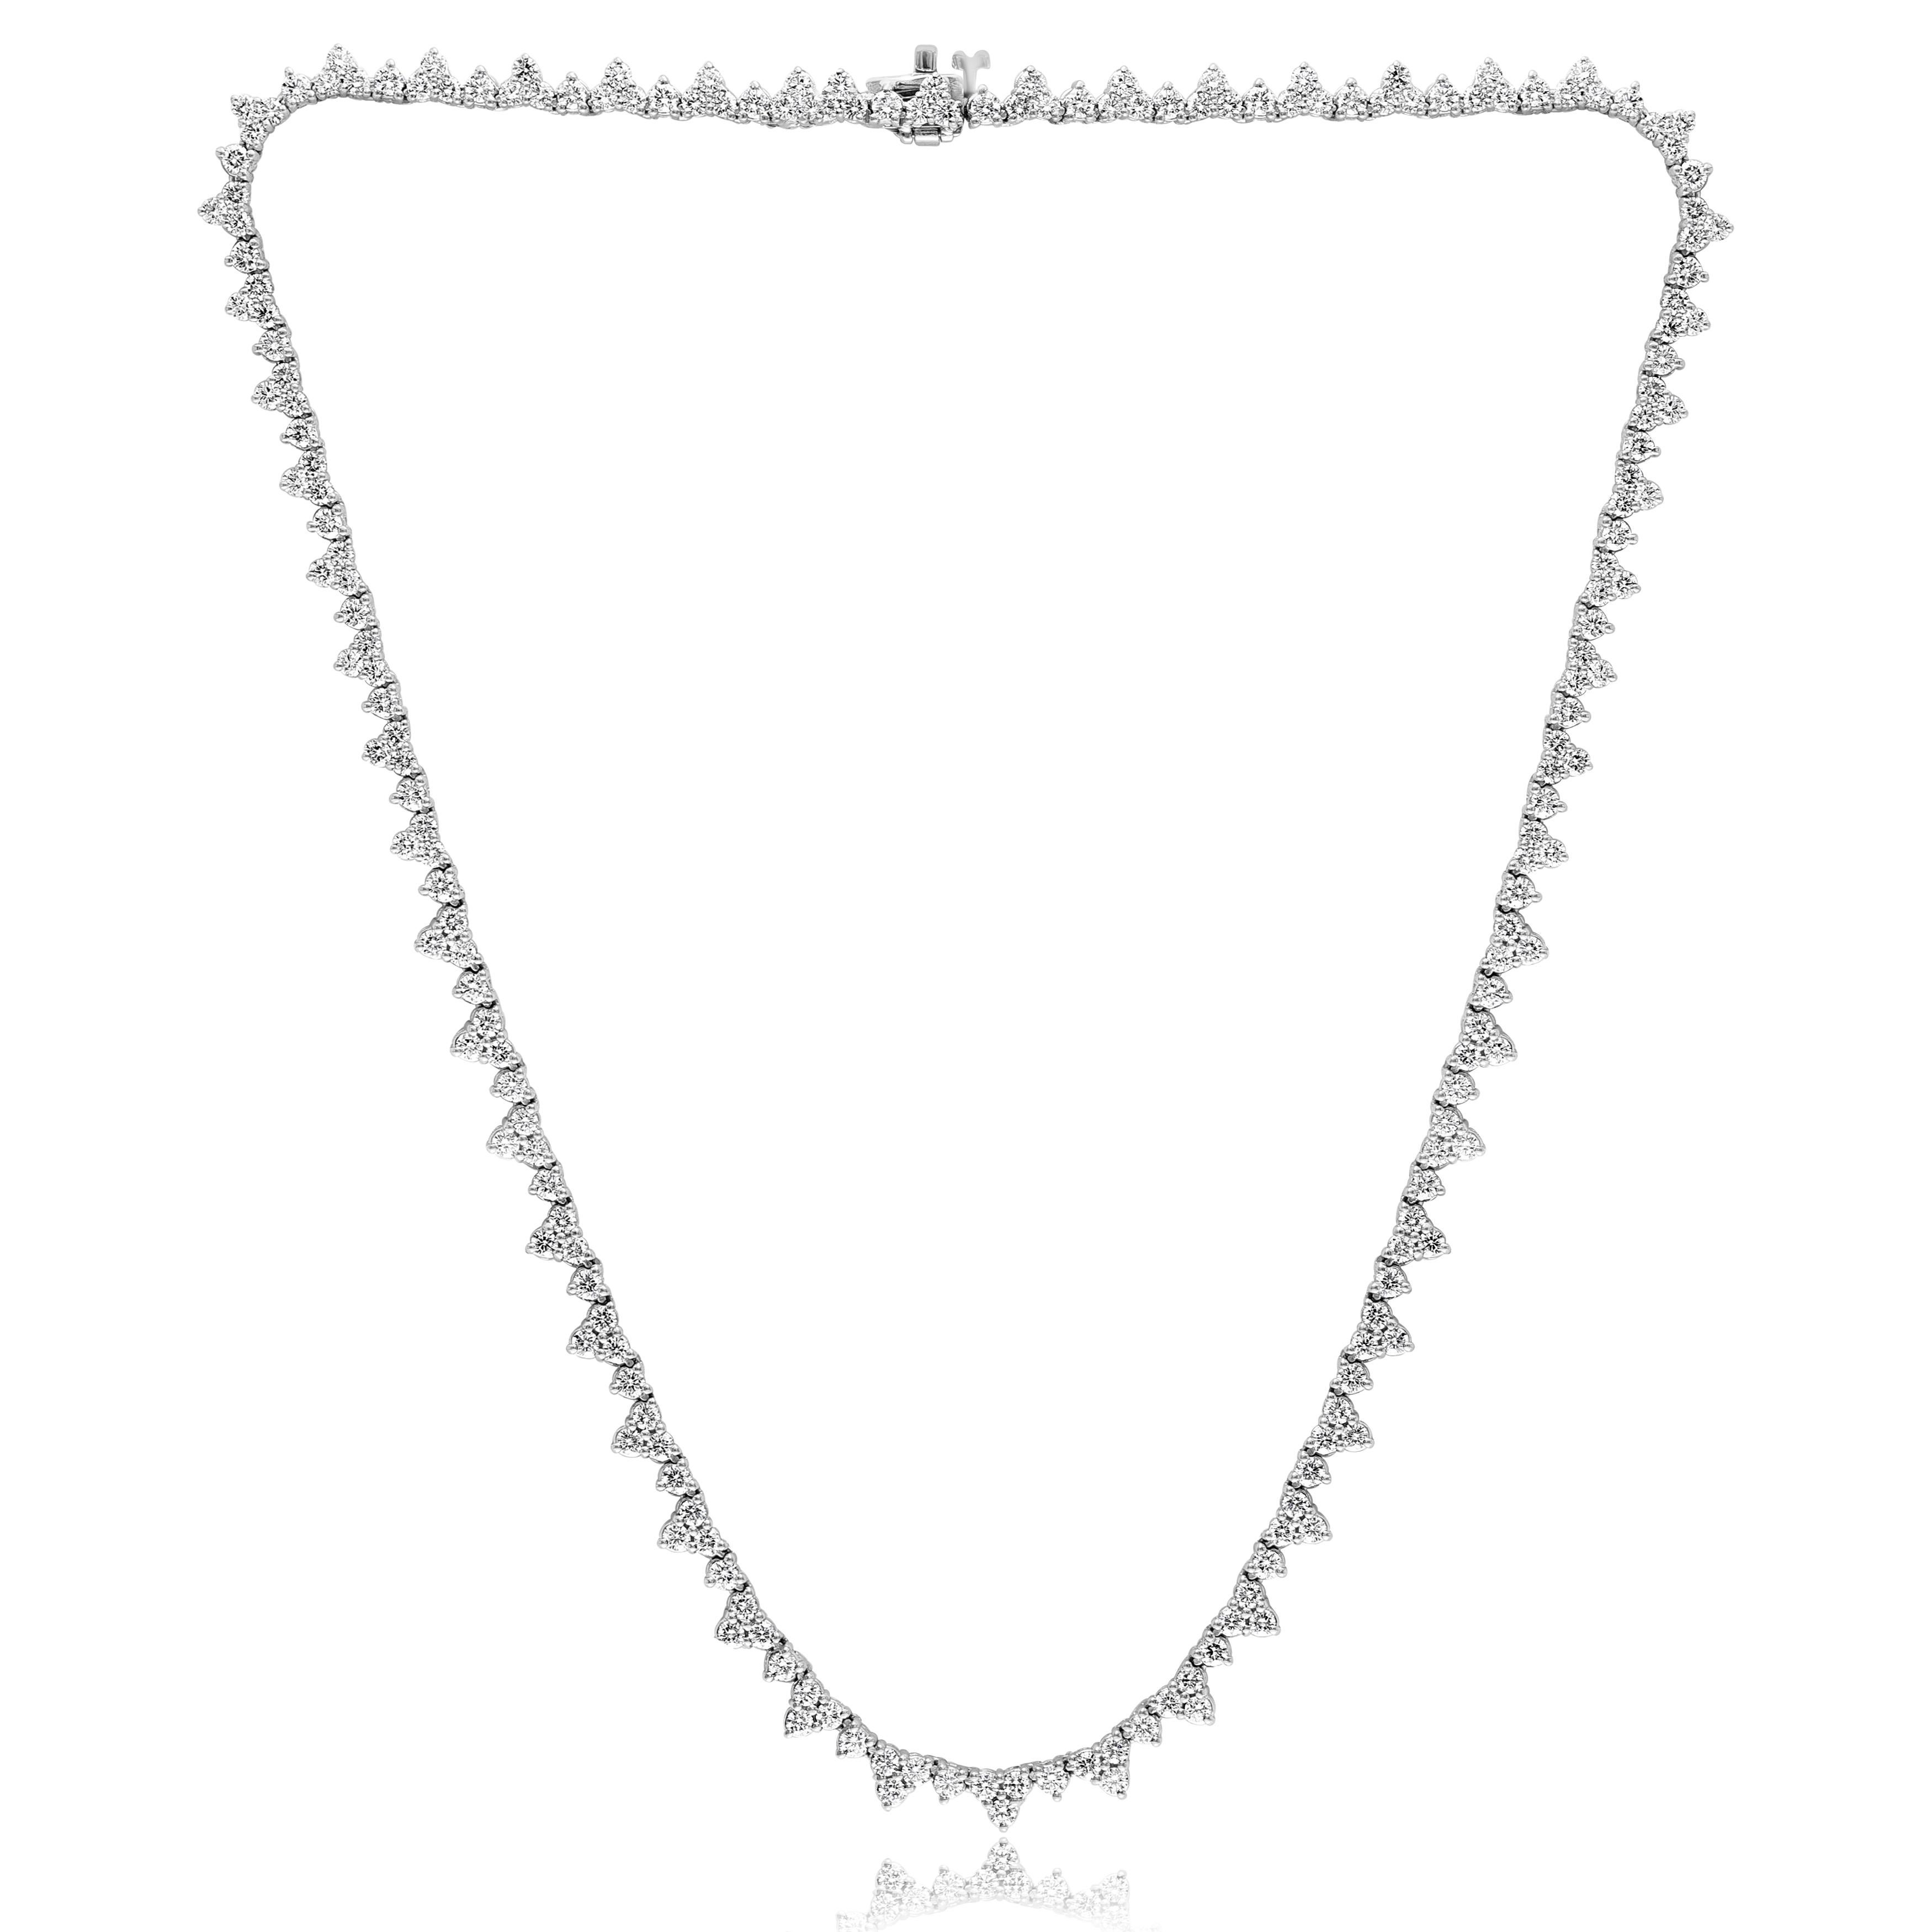 Brilliant Cut 8.46 Carat Diamond Necklace in 14K White Gold For Sale